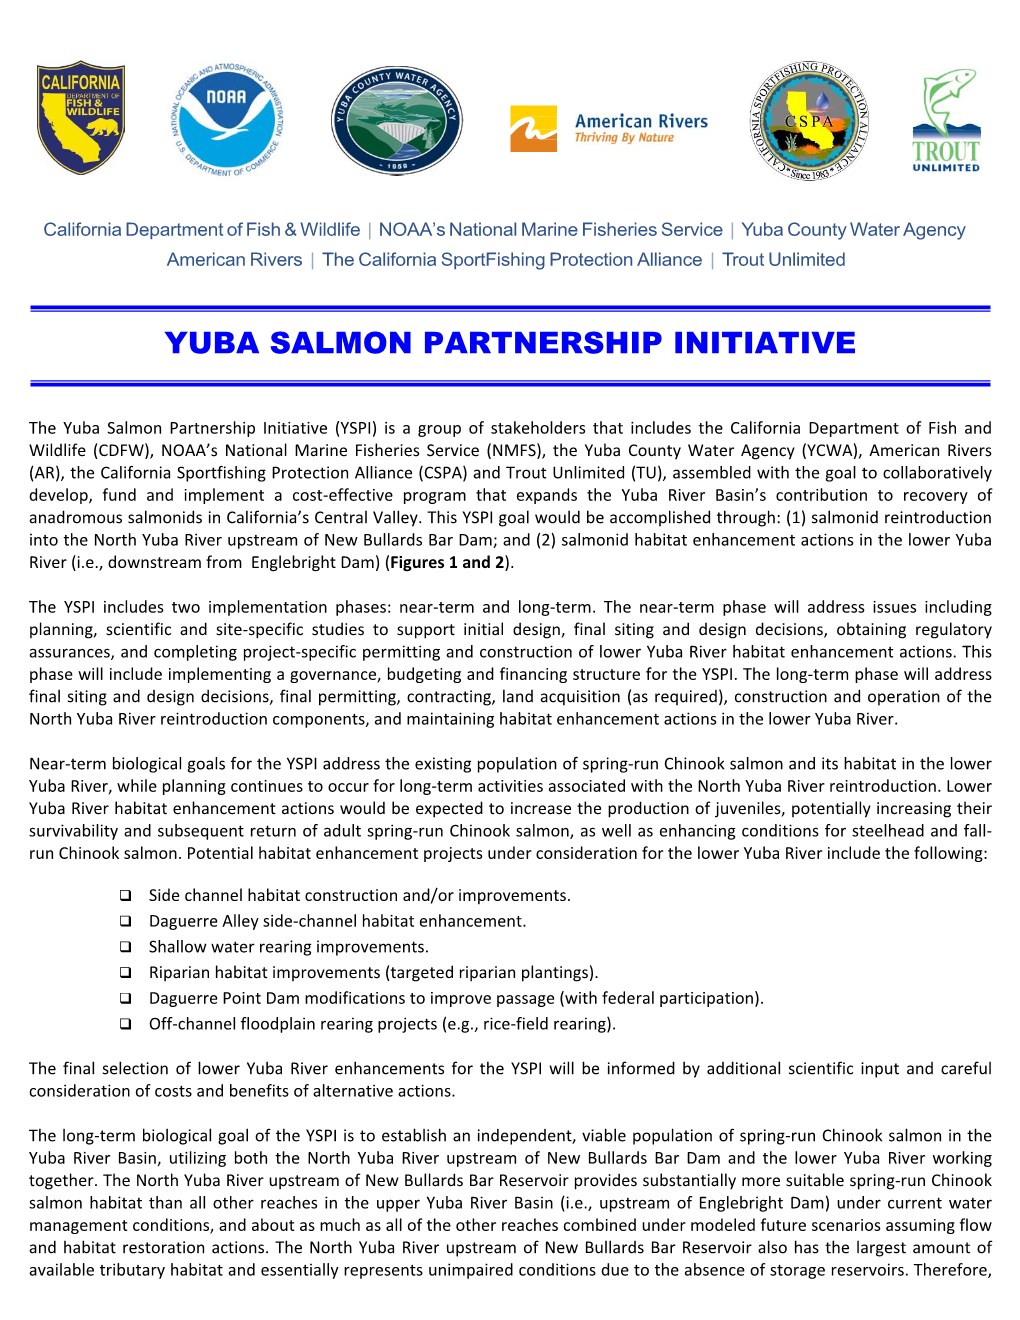 Yuba Salmon Partnership Initiative